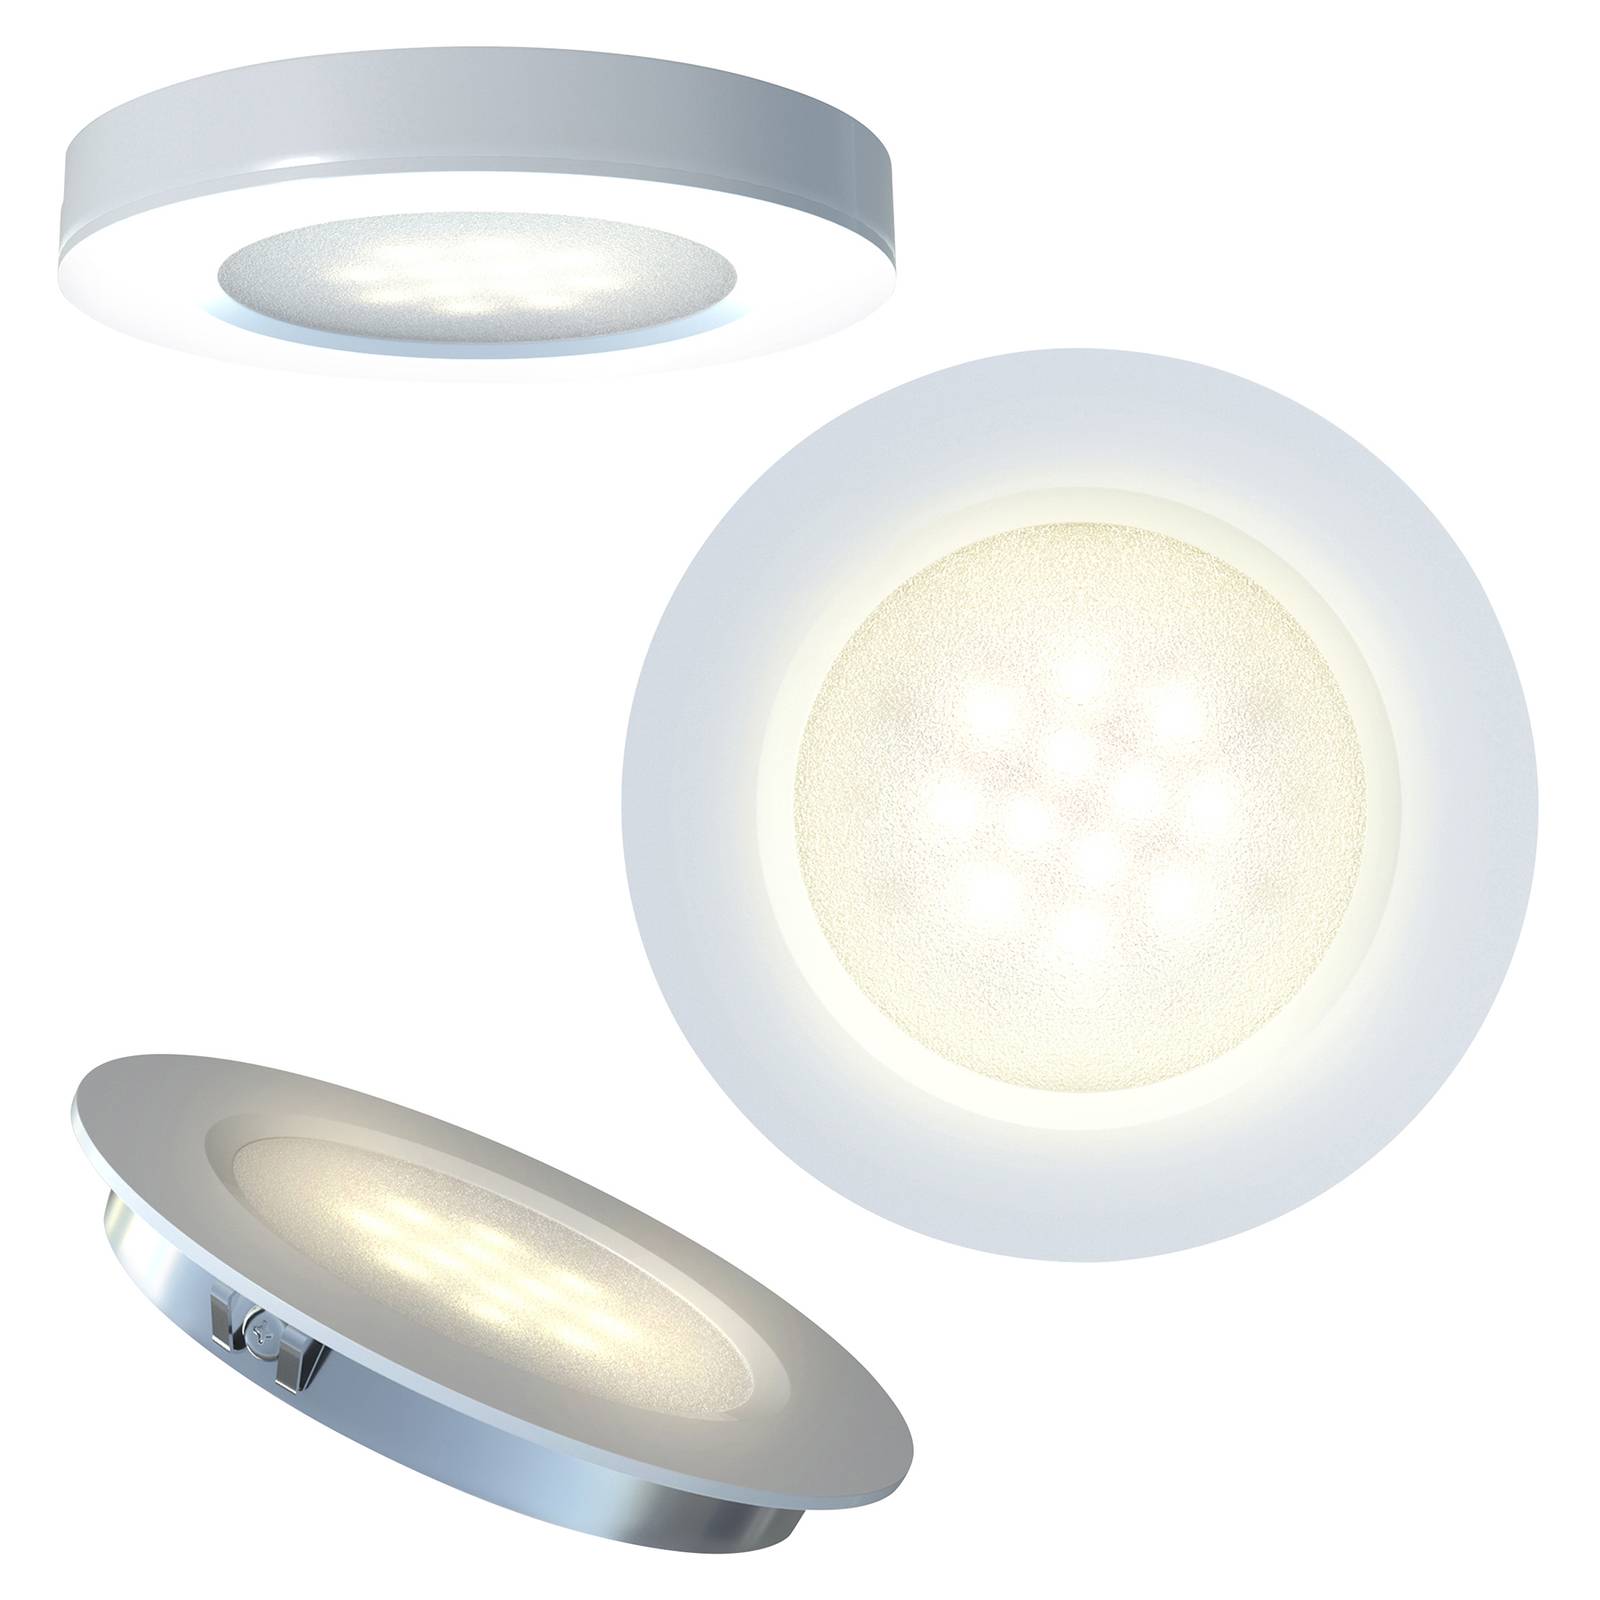 Image of Innr Puck Light lampe encastrable LED, lot de 3 8718781552442